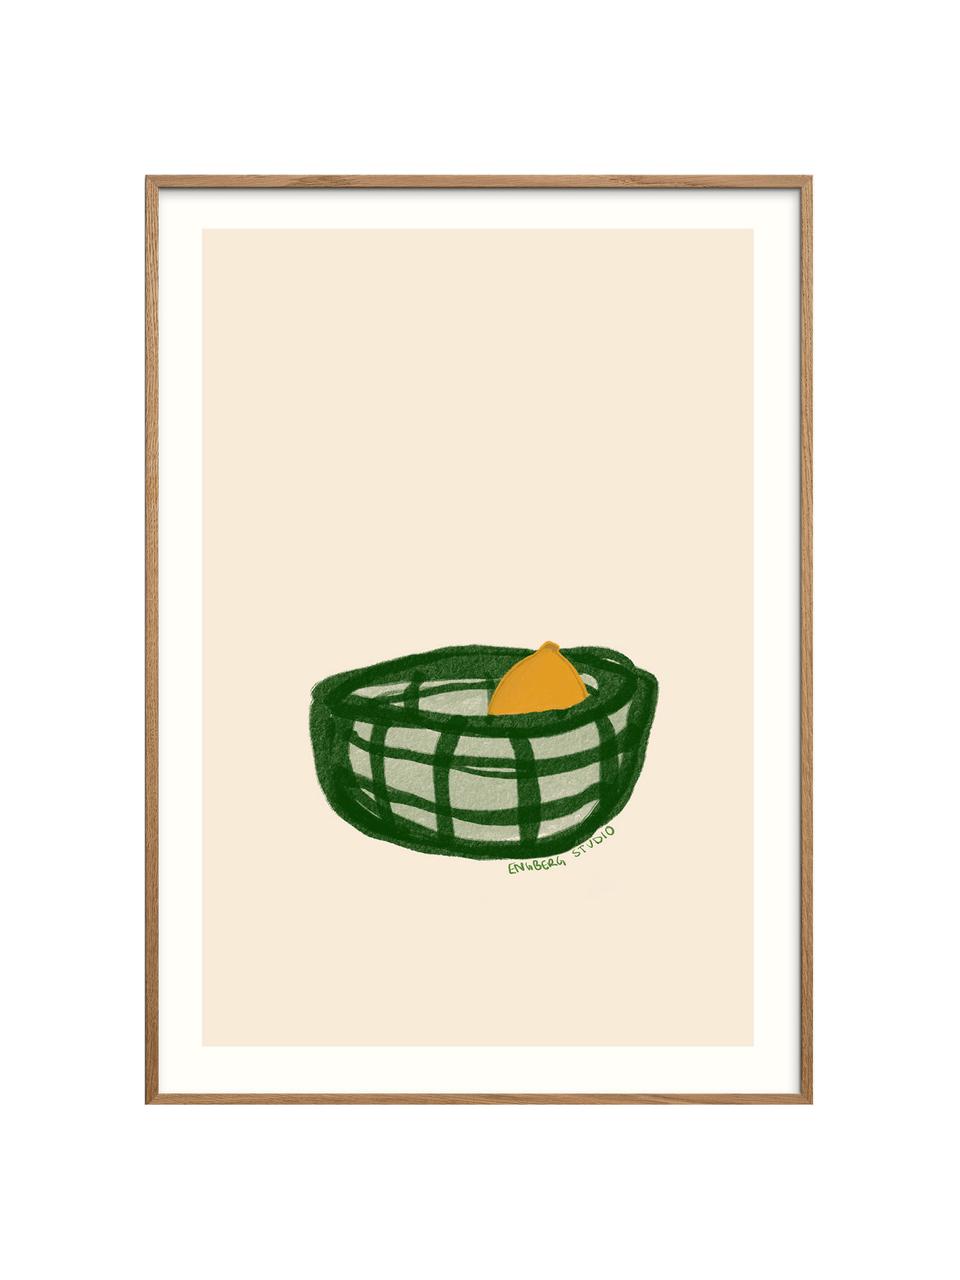 Poster A lemon in a basket, Beige chiaro, tonalità verdi, giallo acceso, Larg. 30 x Alt. 40 cm